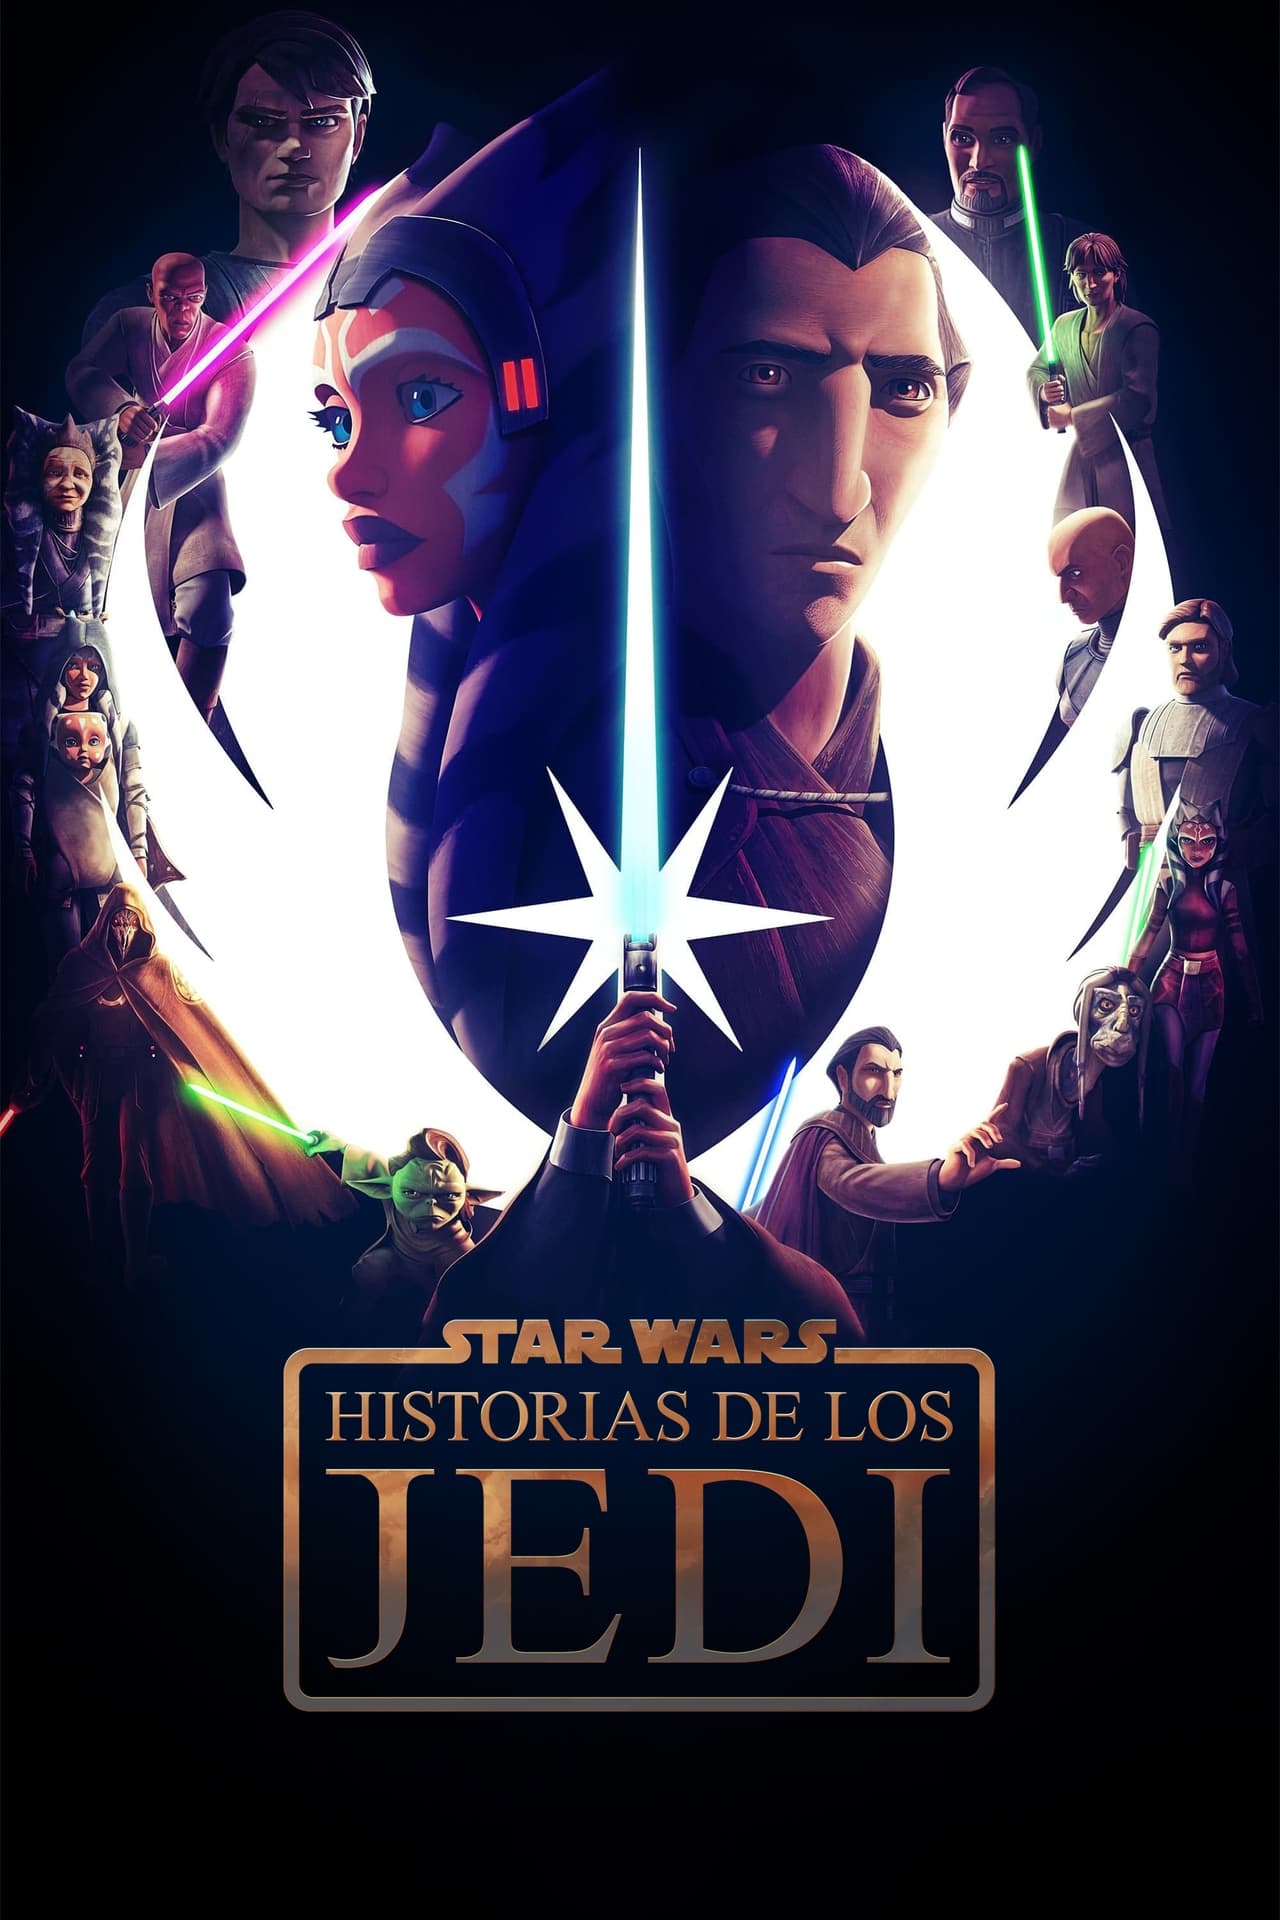 Image Star Wars: Las crónicas jedi